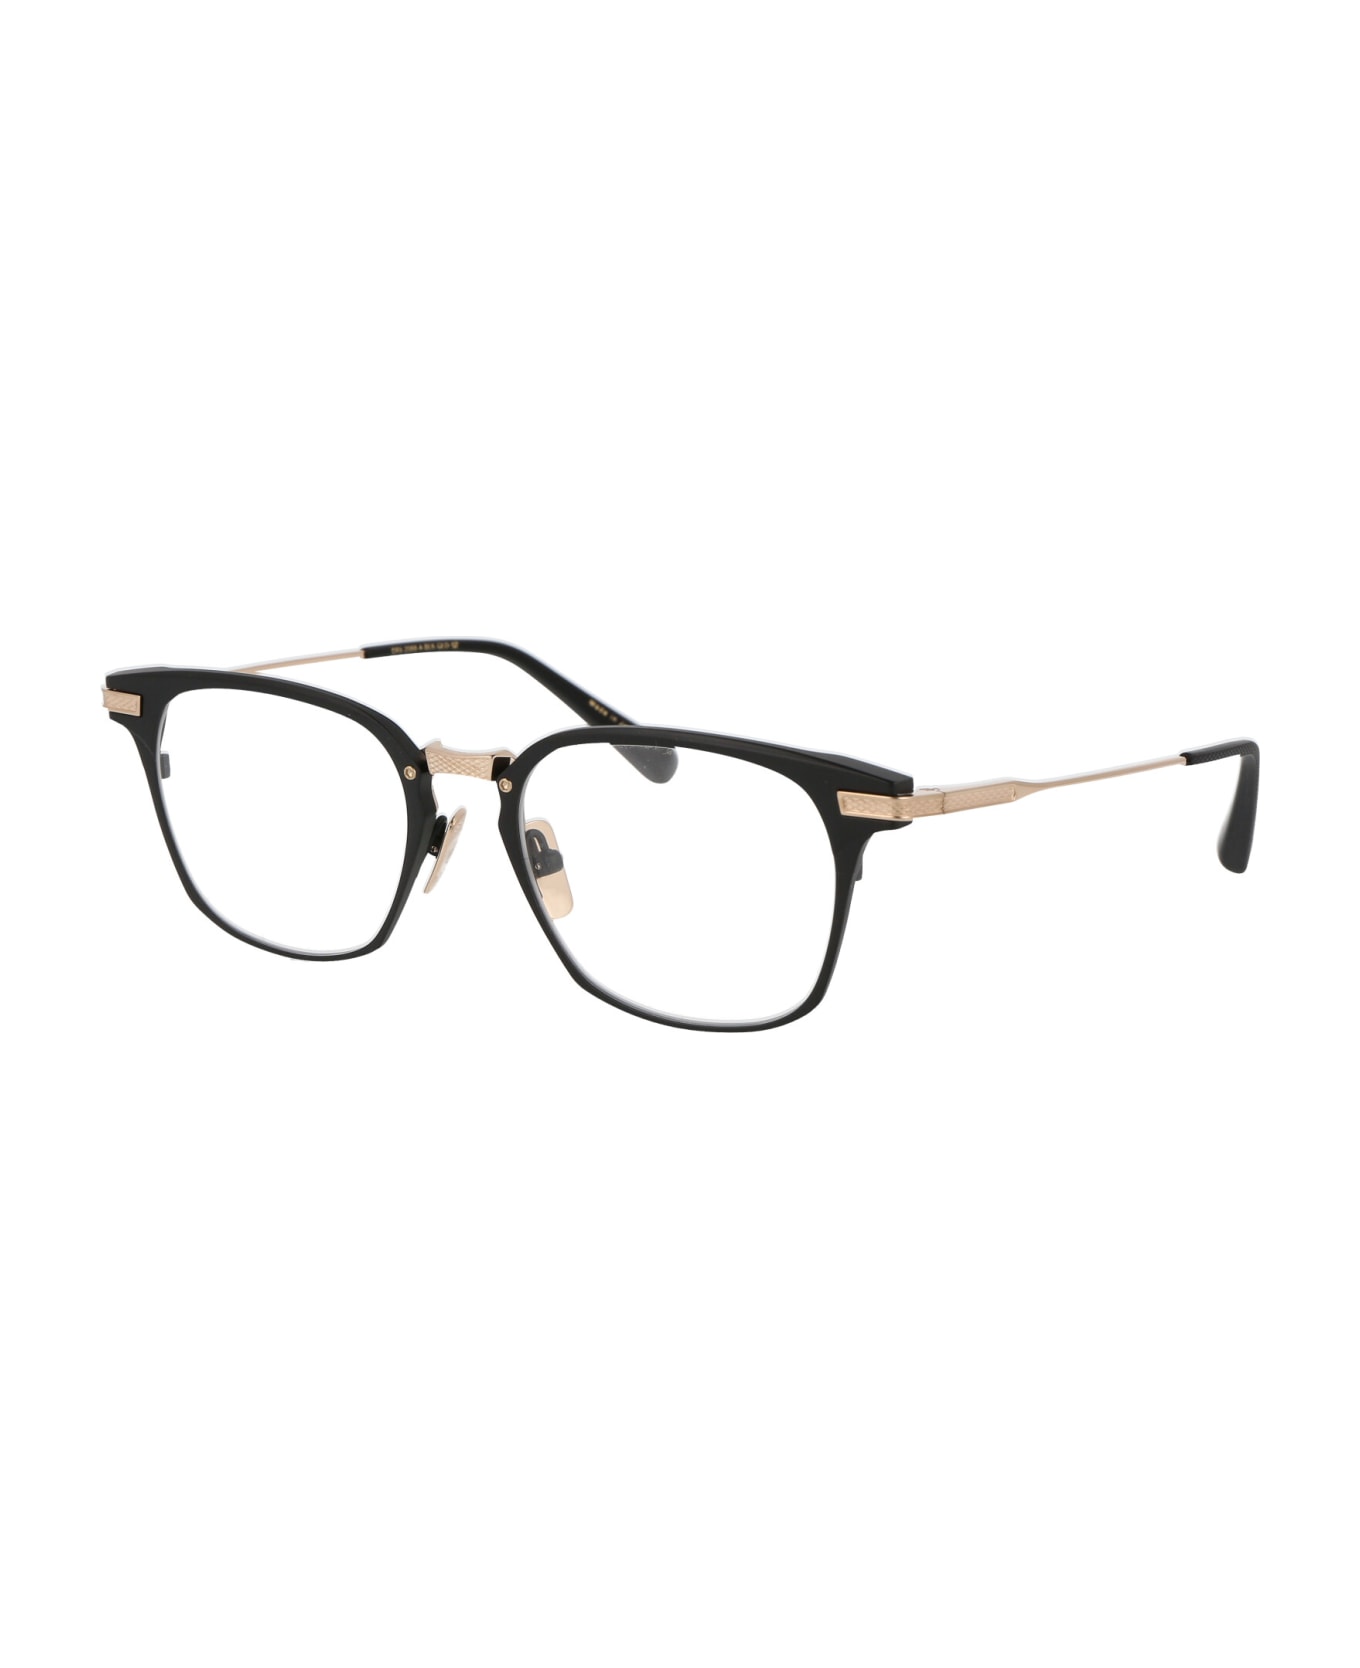 Dita Union Glasses - Matte Black-12K Gold